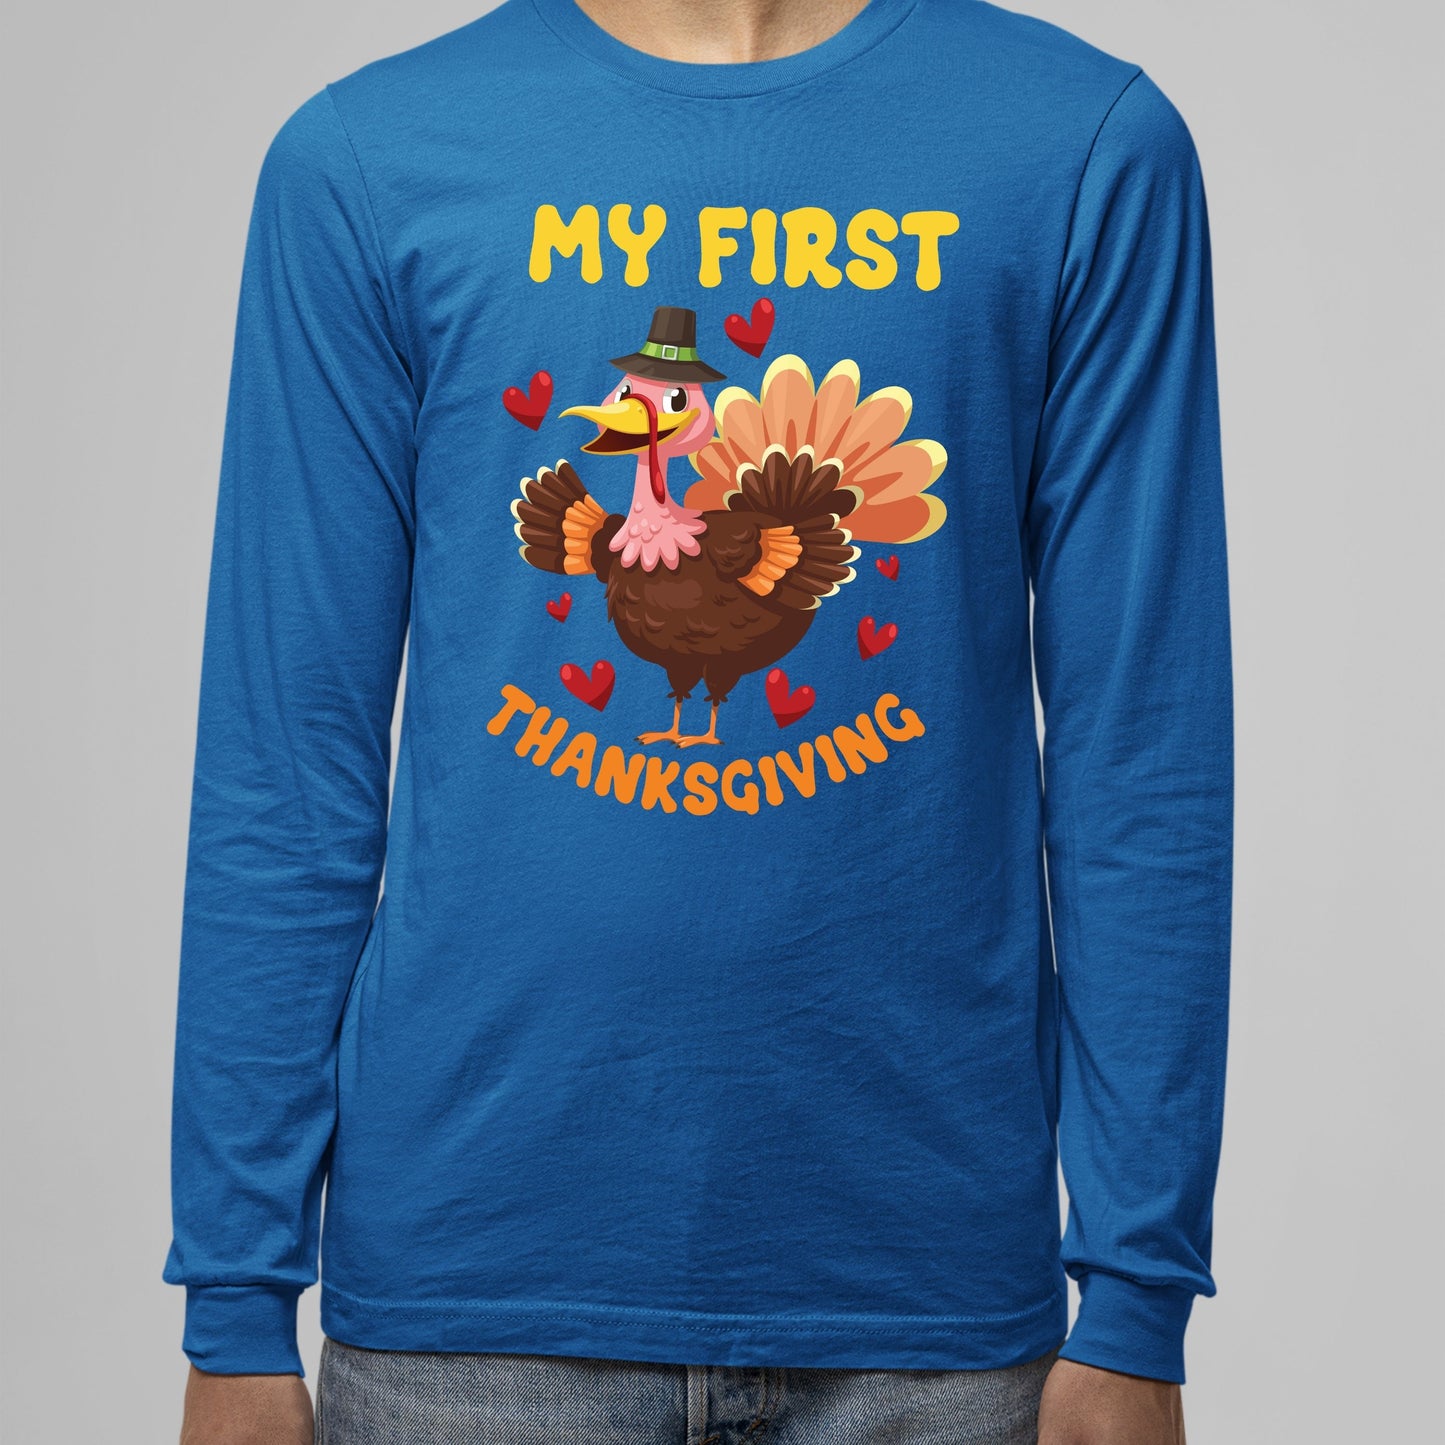 My First Thanks Giving, Thanksgiving Sweater for Men, Thanksgiving Gift Ideas, Cute Thanksgiving, Thanksgiving Sweatshirt